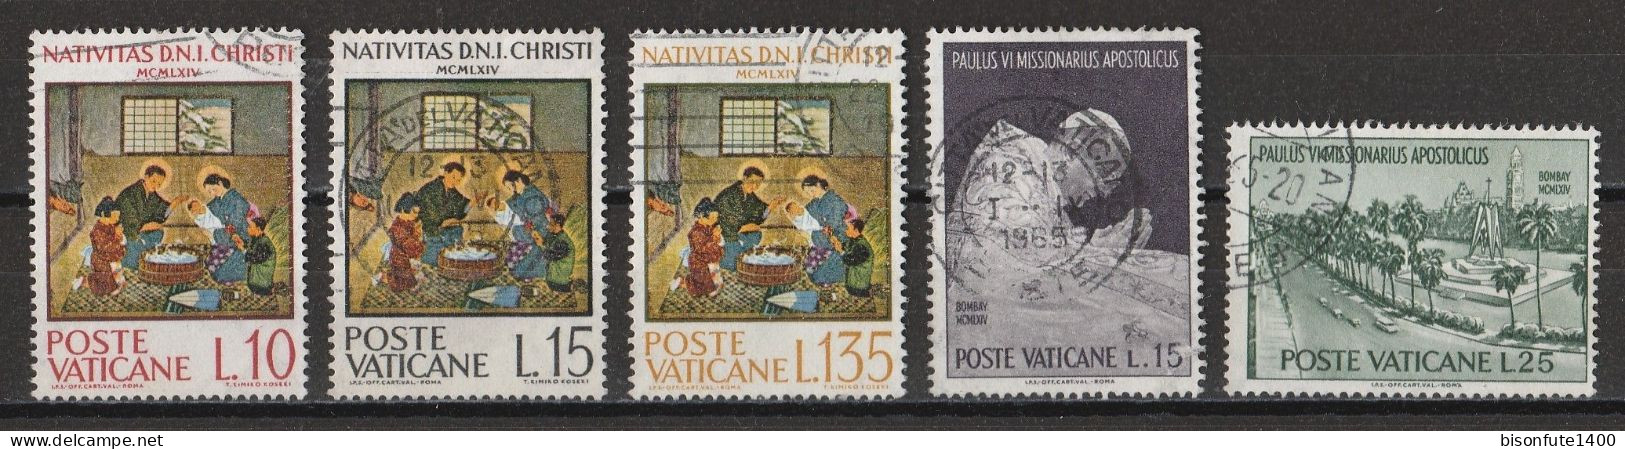 Vatican 1964 : Timbres Yvert & Tellier N° 415 - 416 - 417 - 418 - 419 - 420 Et 421 Oblitérés. - Used Stamps